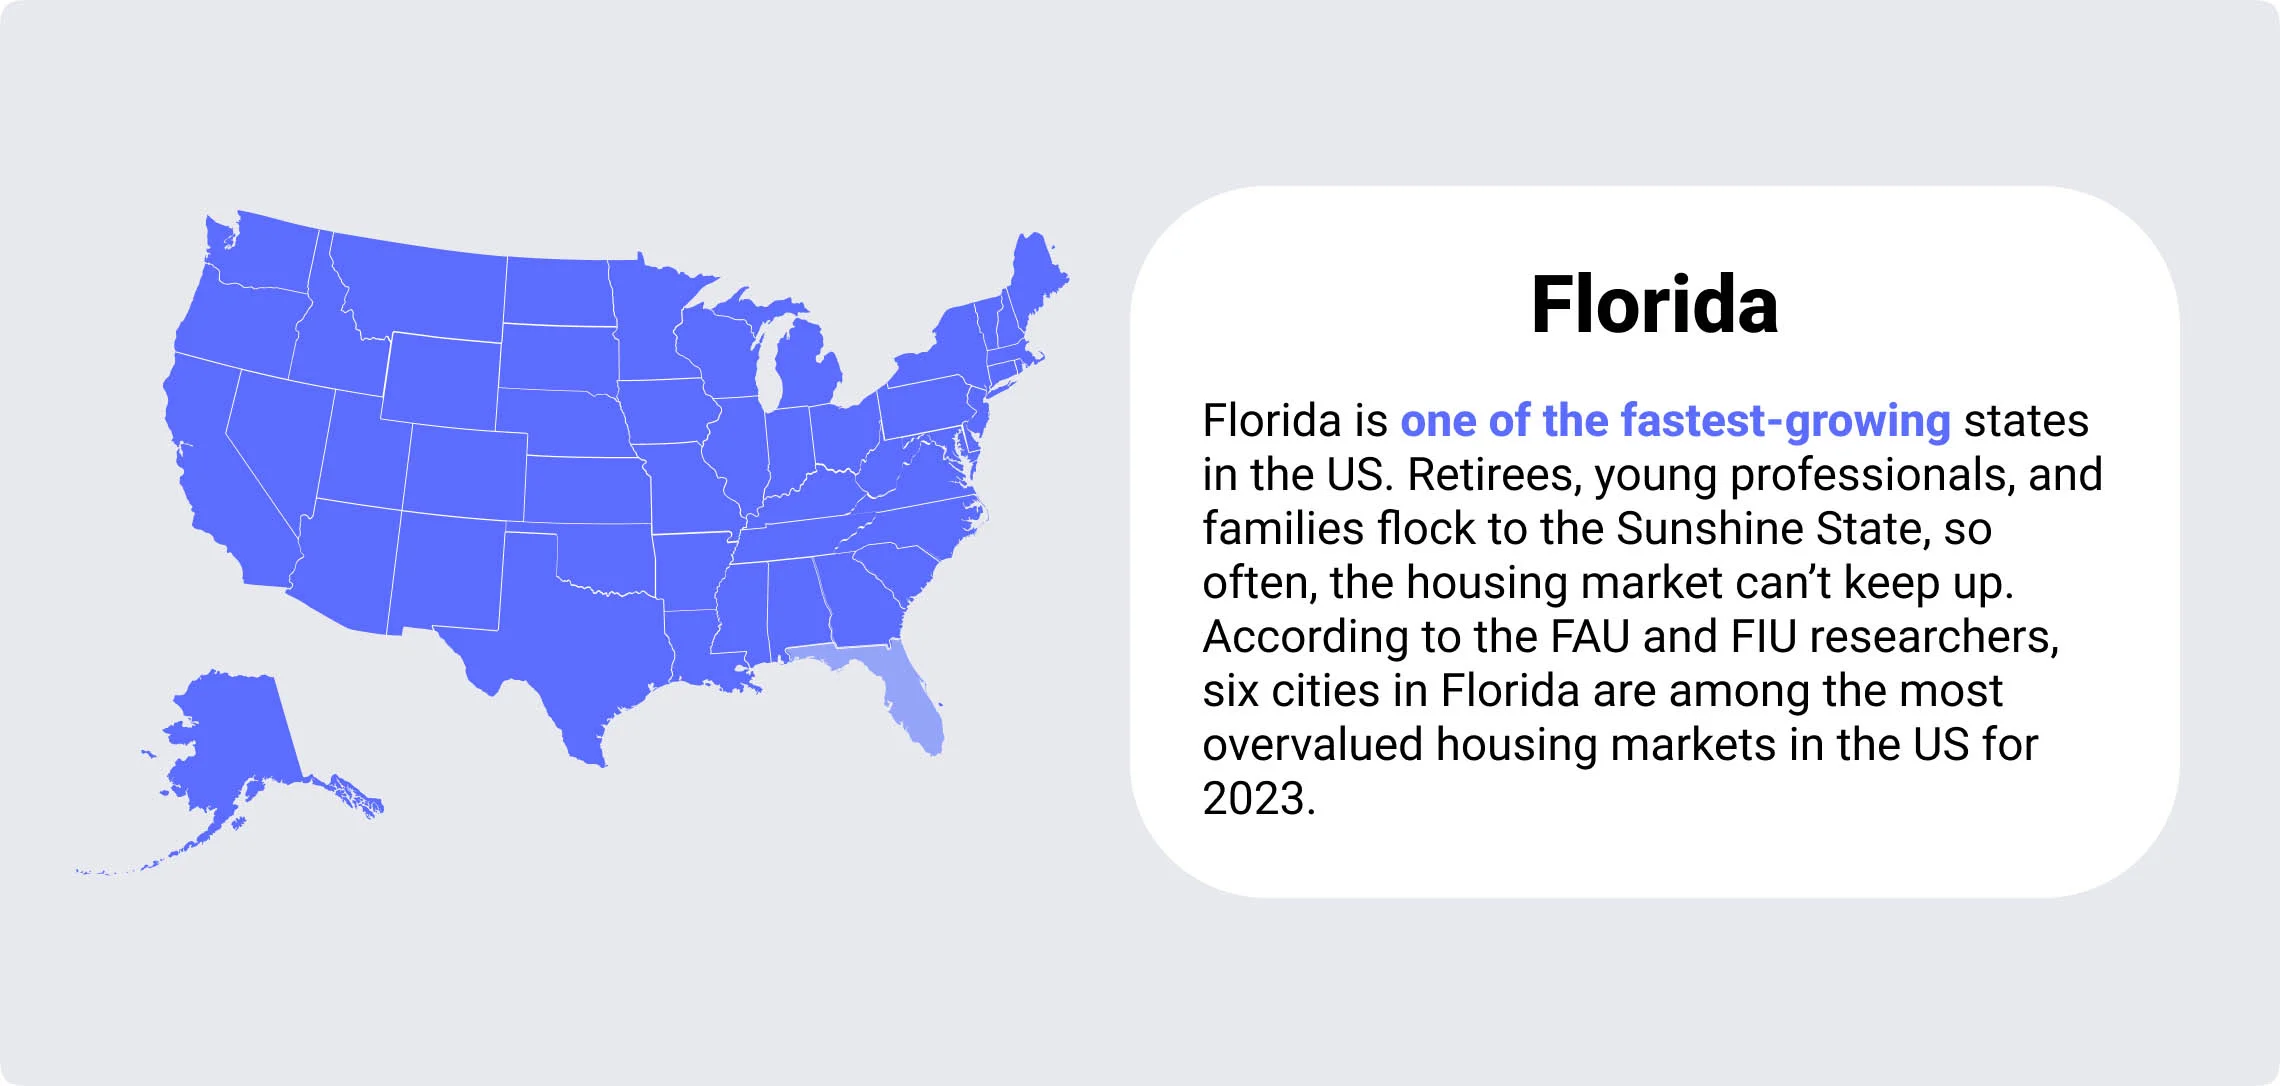 Florida overvalued housing markets